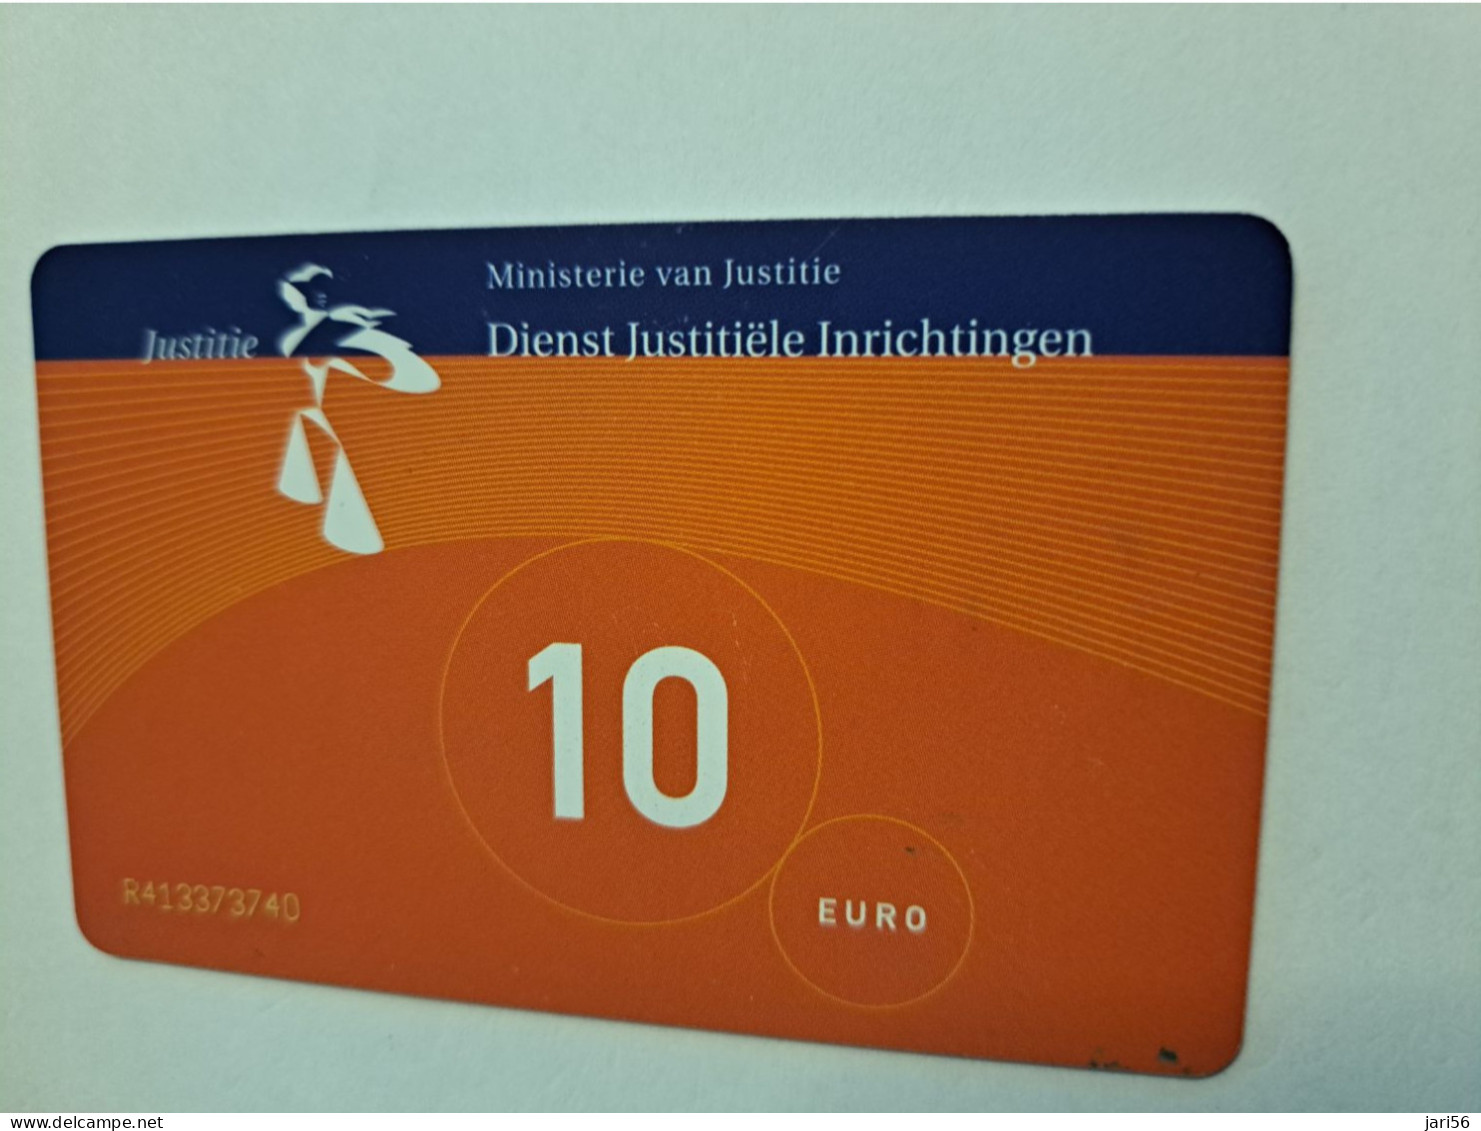 NETHERLANDS   € 10,-  ,-  / USED  / DATE  01-01/09  JUSTITIE/PRISON CARD  CHIP CARD/ USED   ** 16025** - Cartes GSM, Prépayées Et Recharges